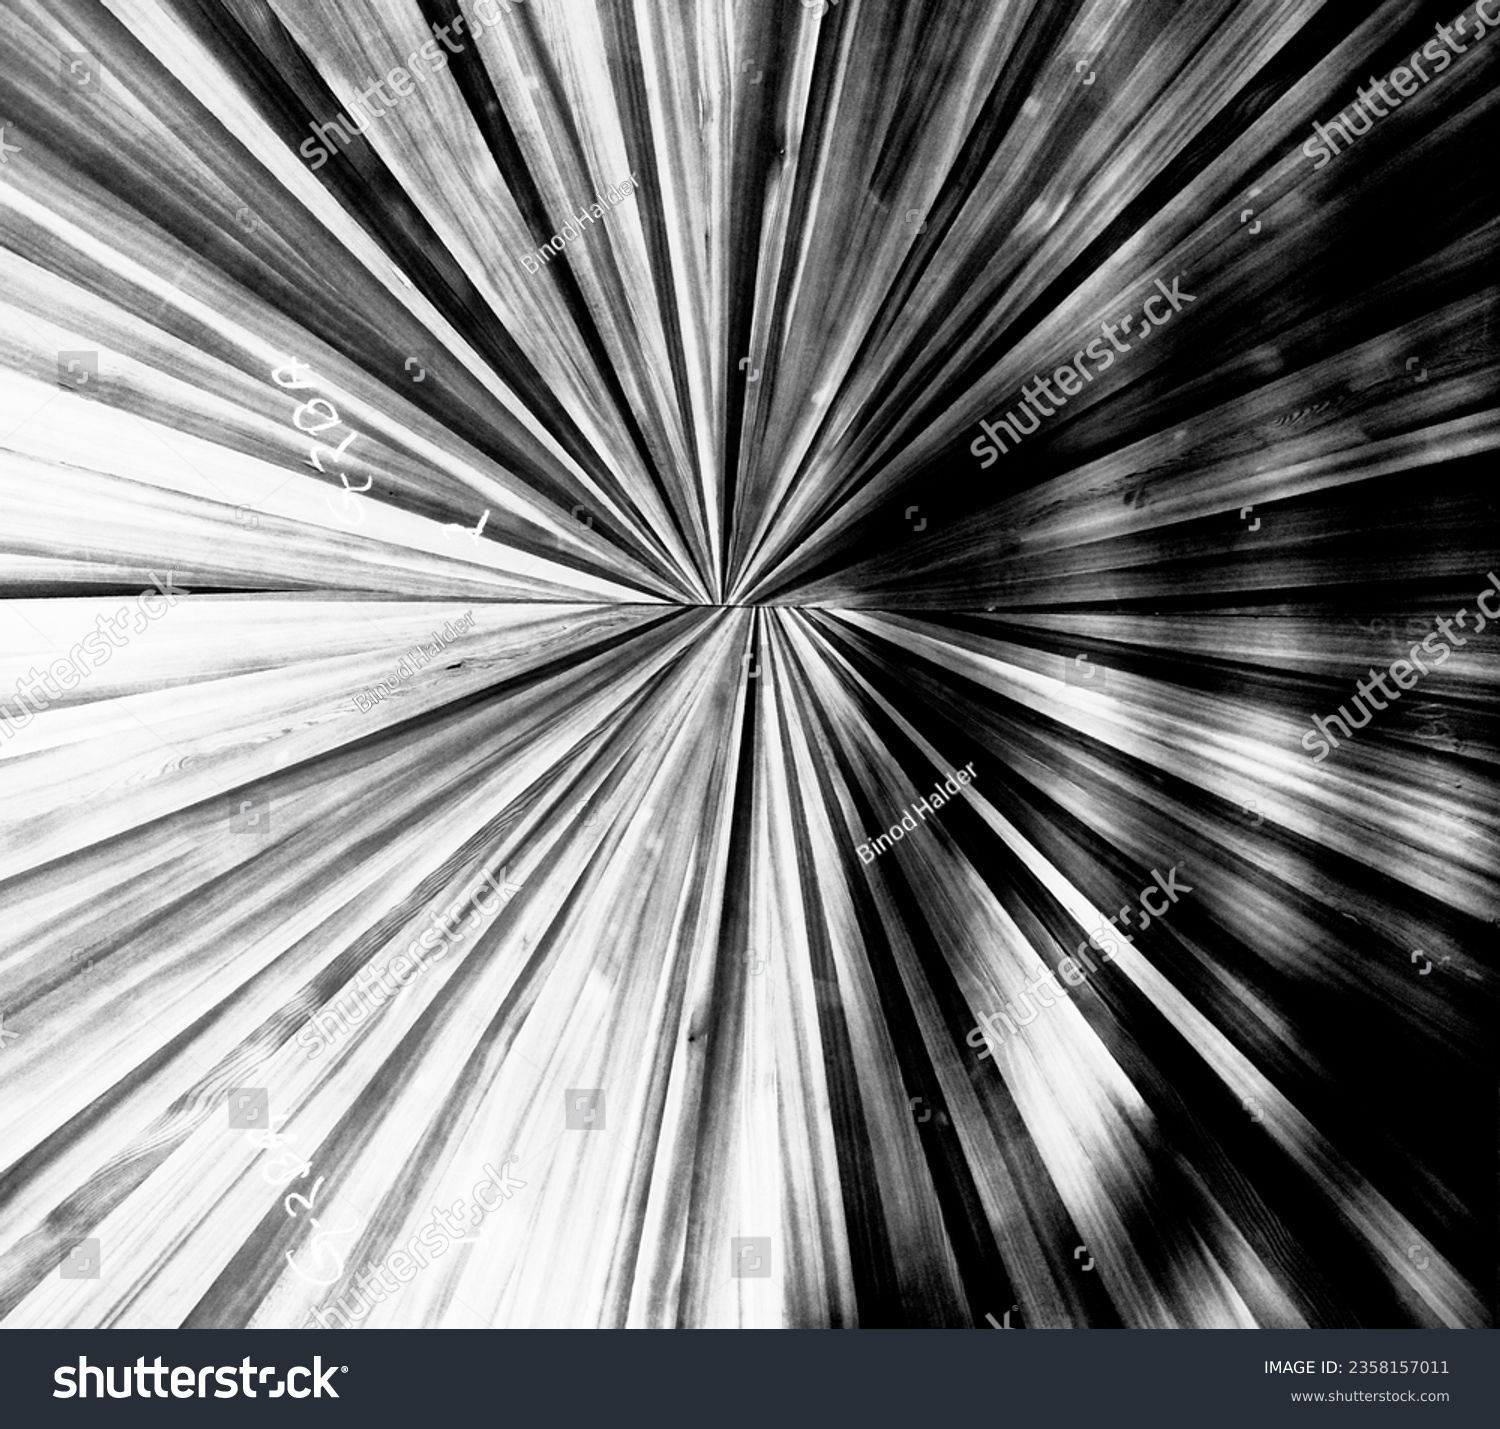 A black and white image of a sunburst #2358157011